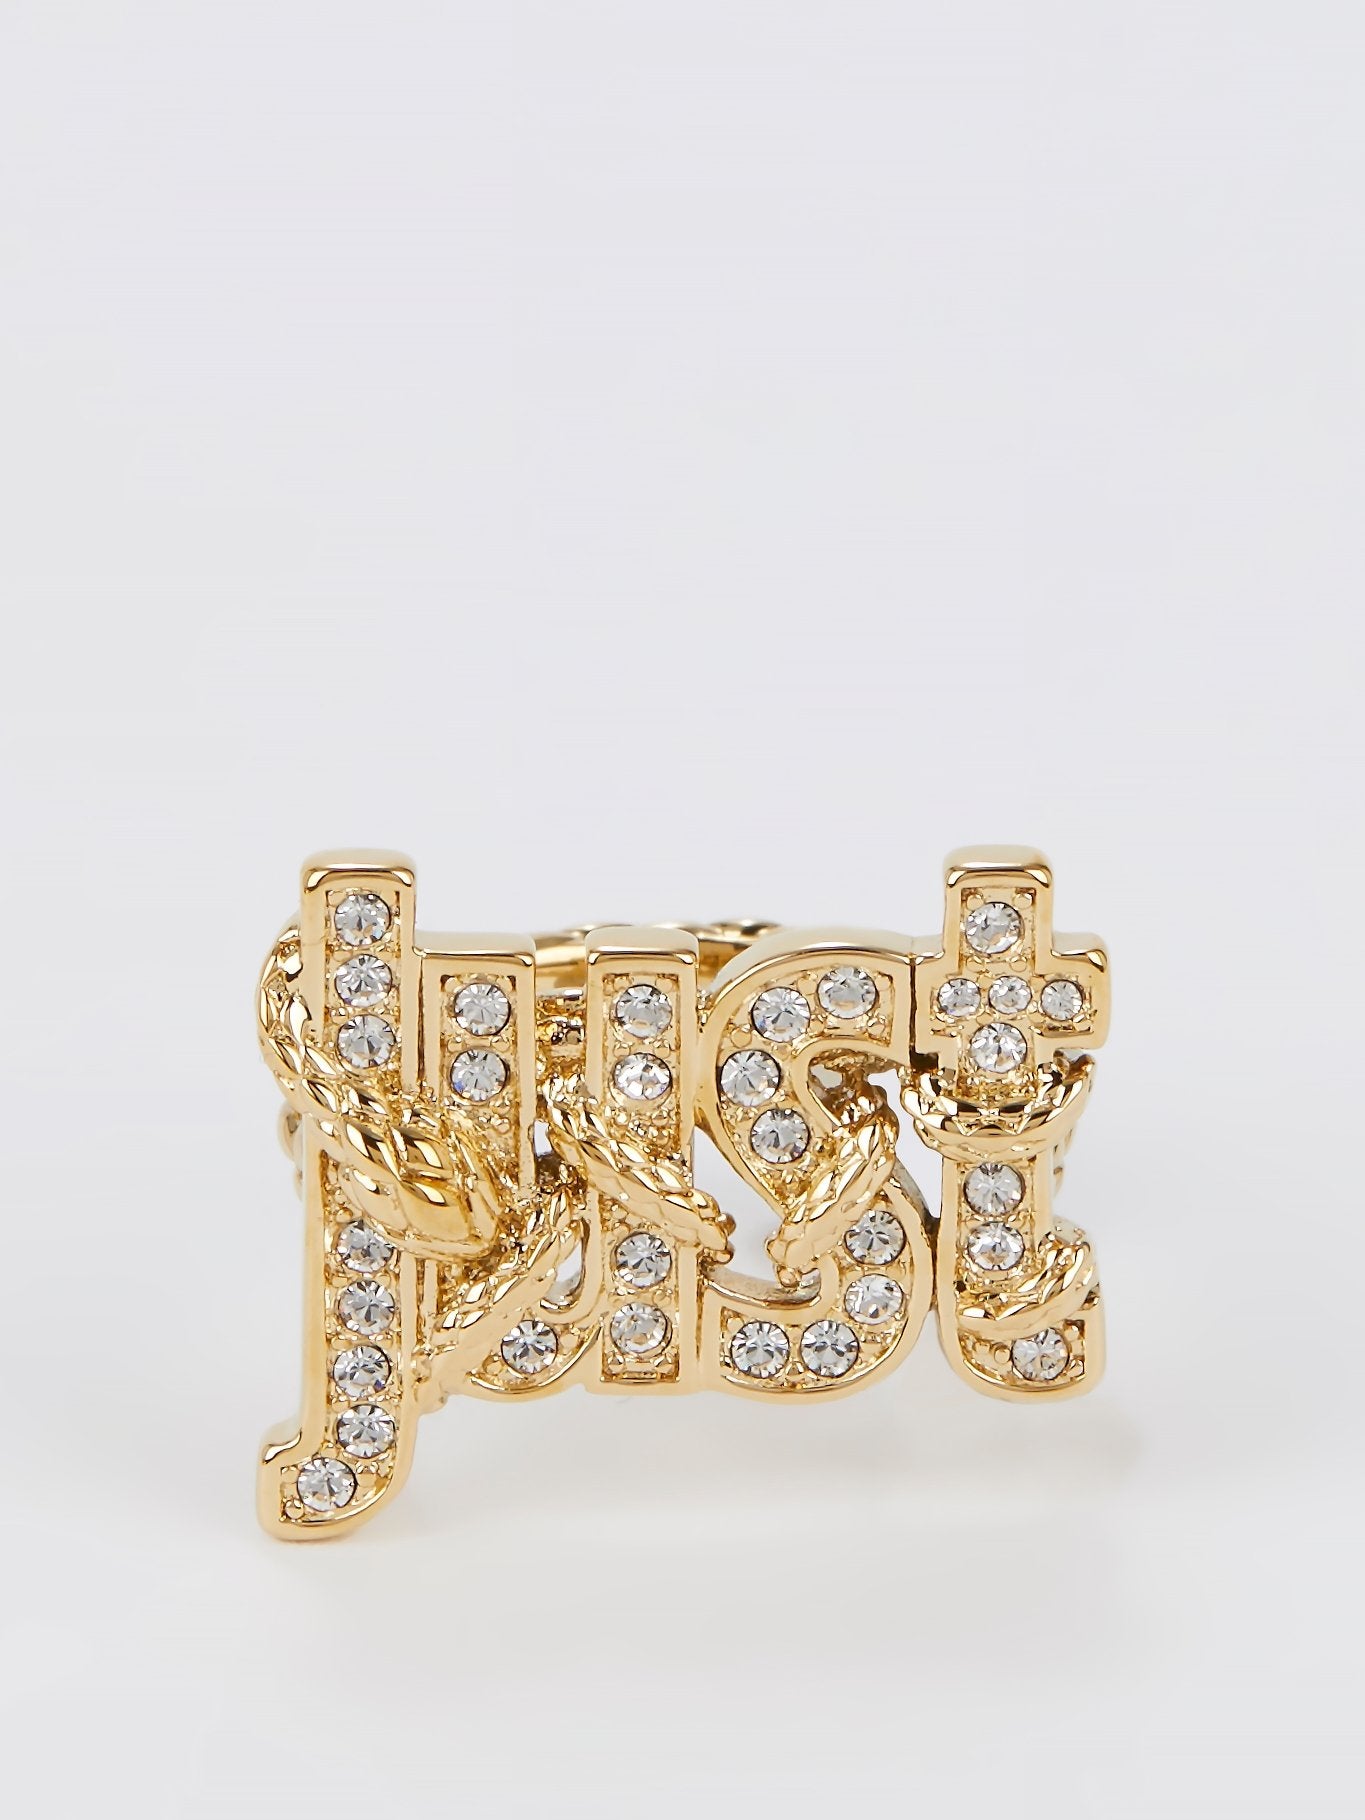 Gold Crystal Studded Monogram Ring - Size 8